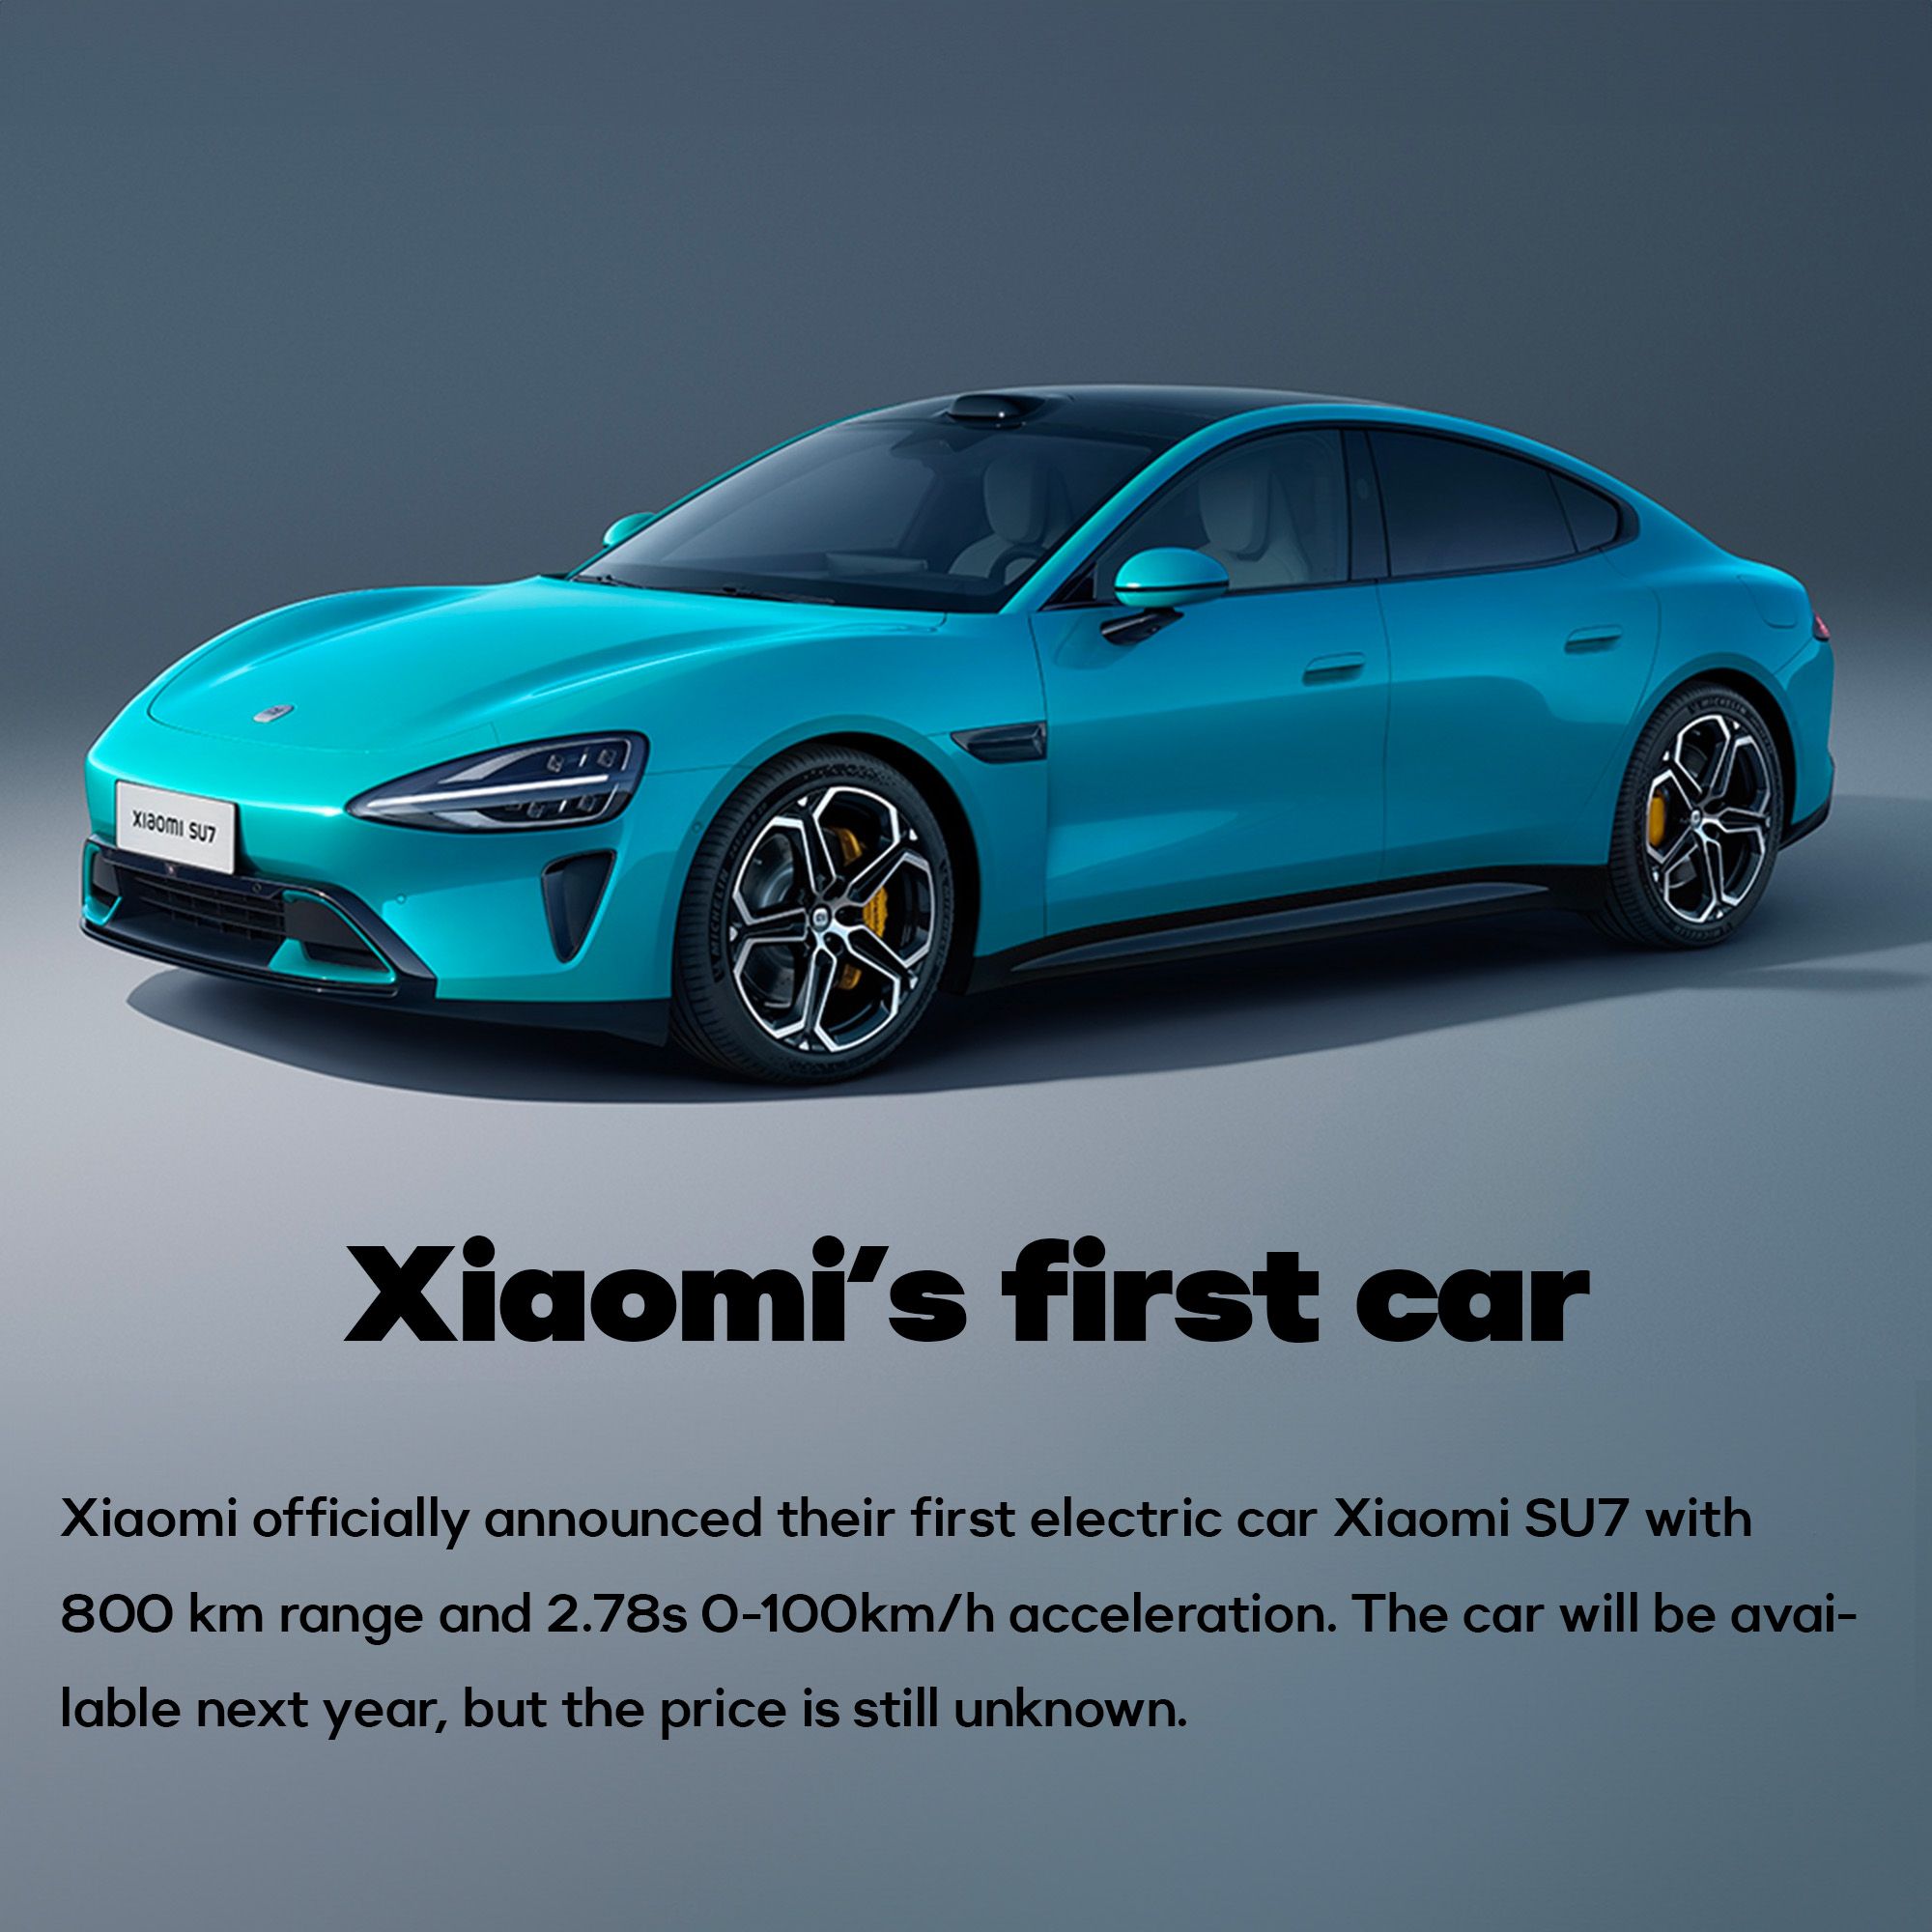 Xiaomi's first car